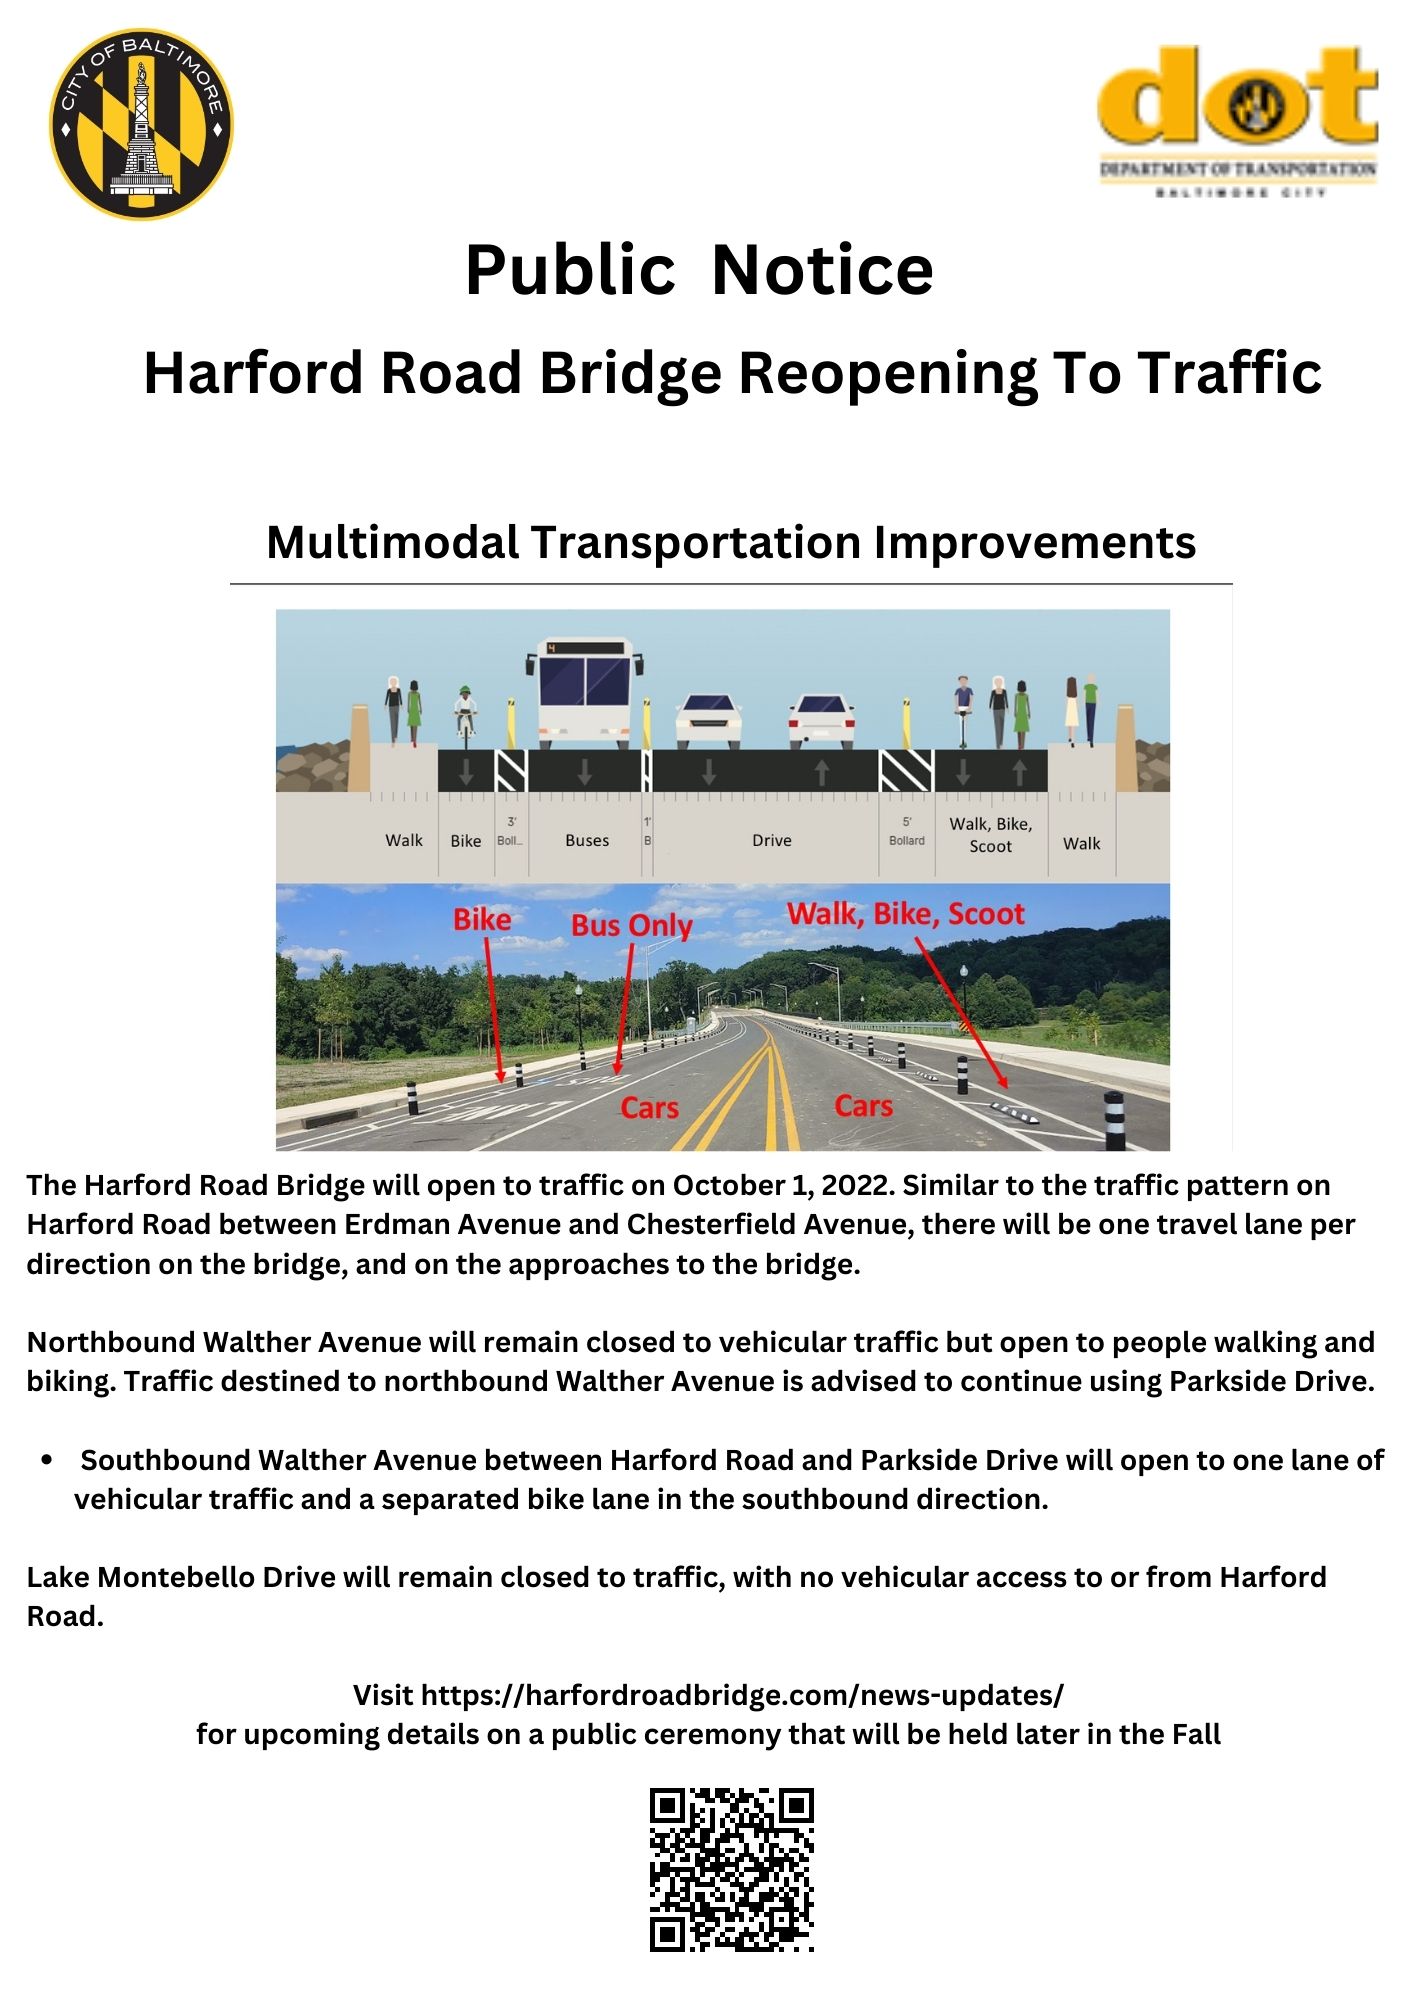 Harford Road Bridge Reopening On October 1, 2022